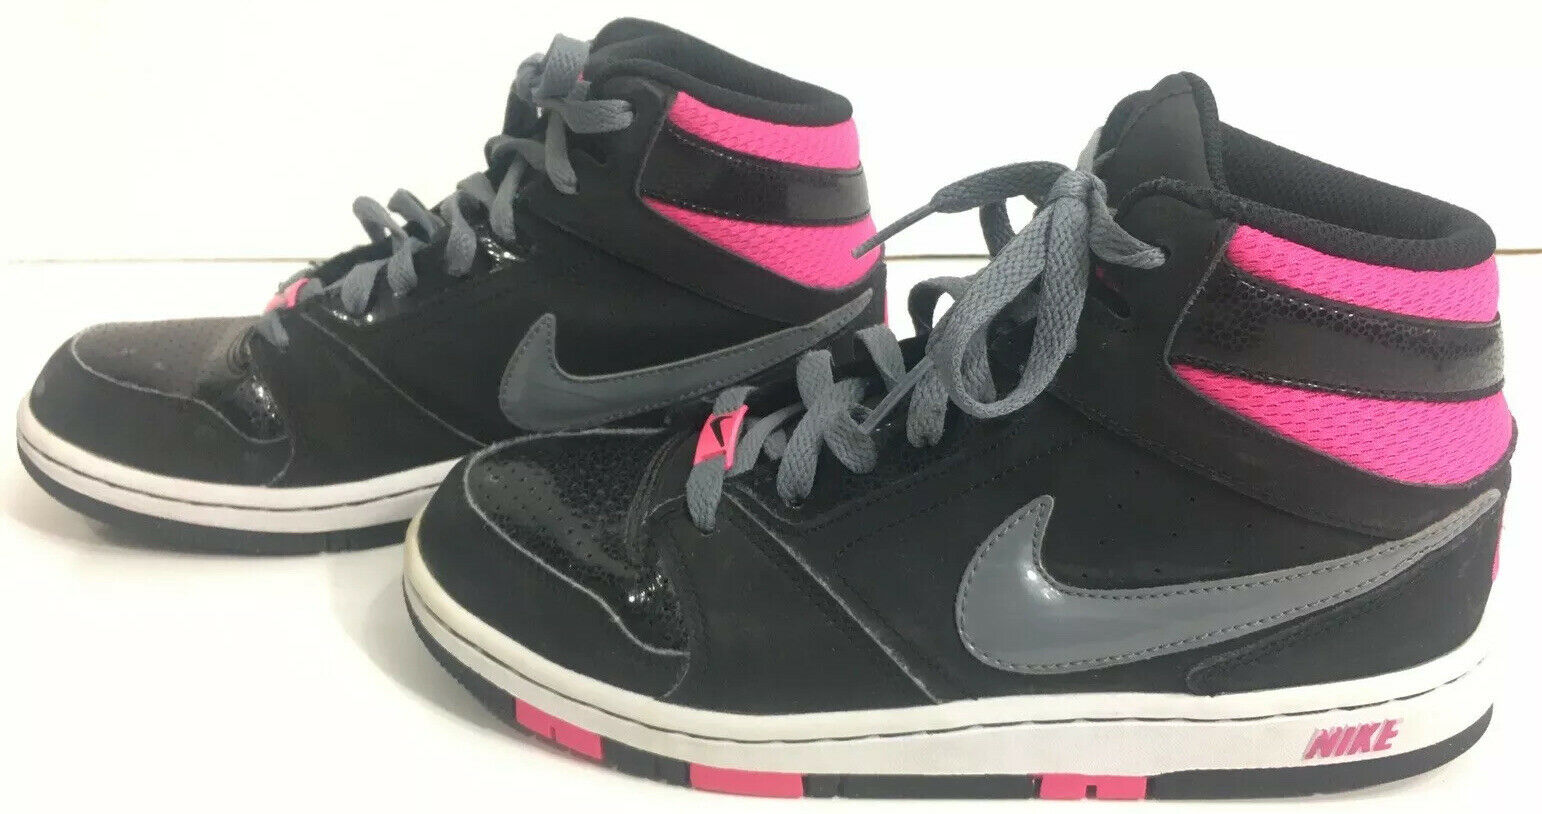 Nike Prestige Girls High Tops Gray Black Pink Shoes - 5.5Y